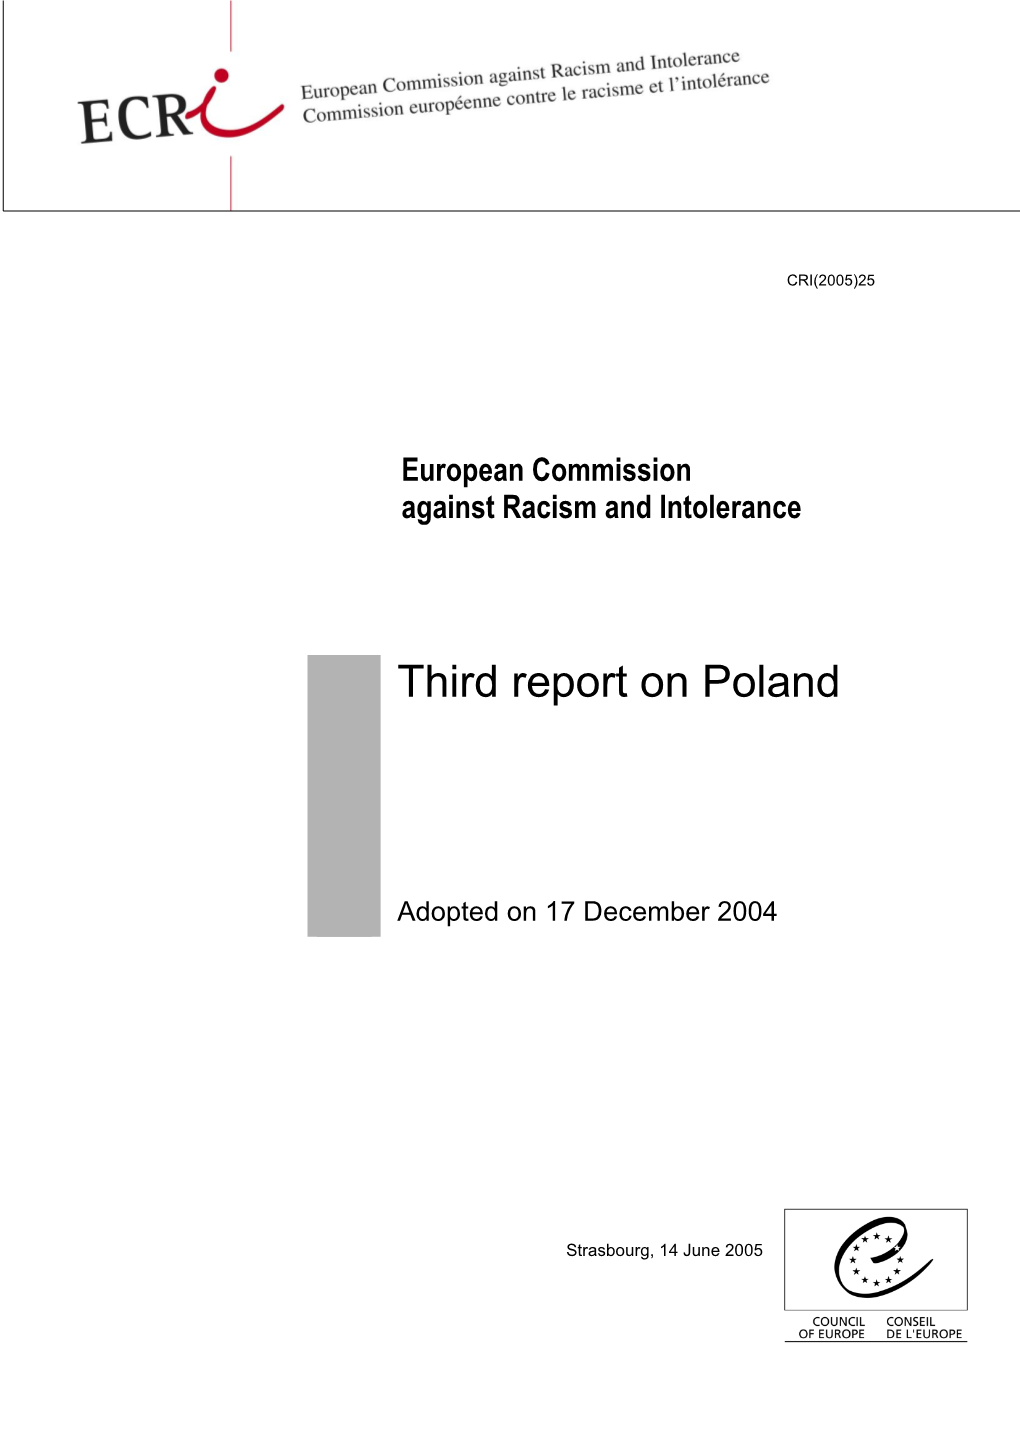 Third Report on Poland